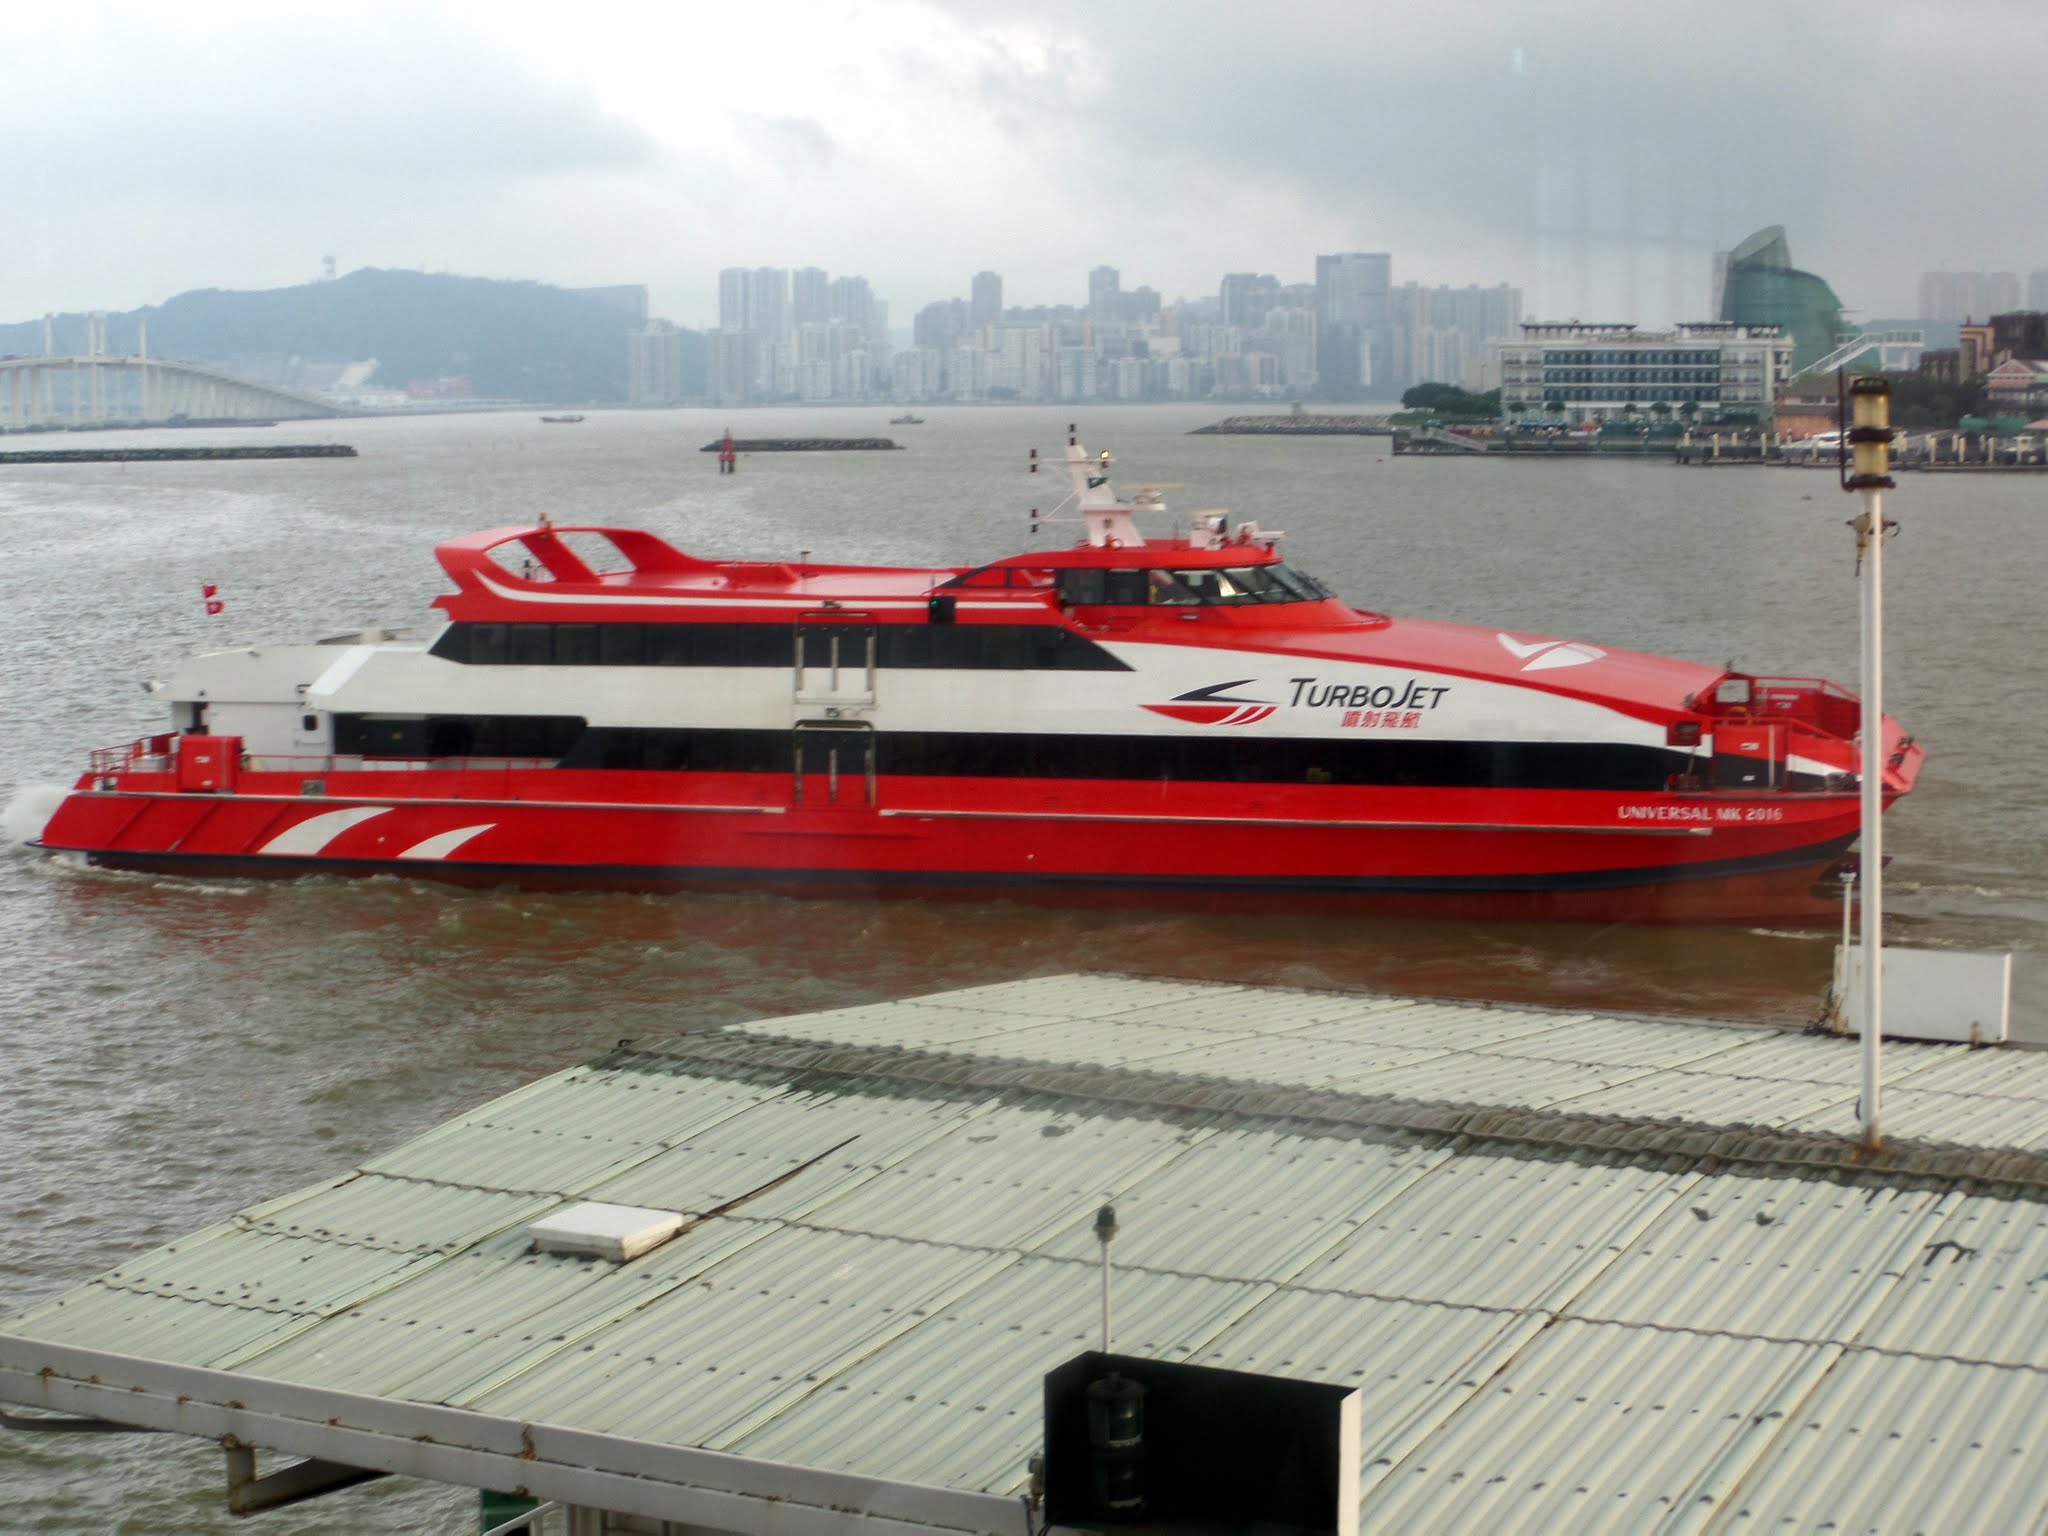 Turbojet ferry between Hong Kong and Macau